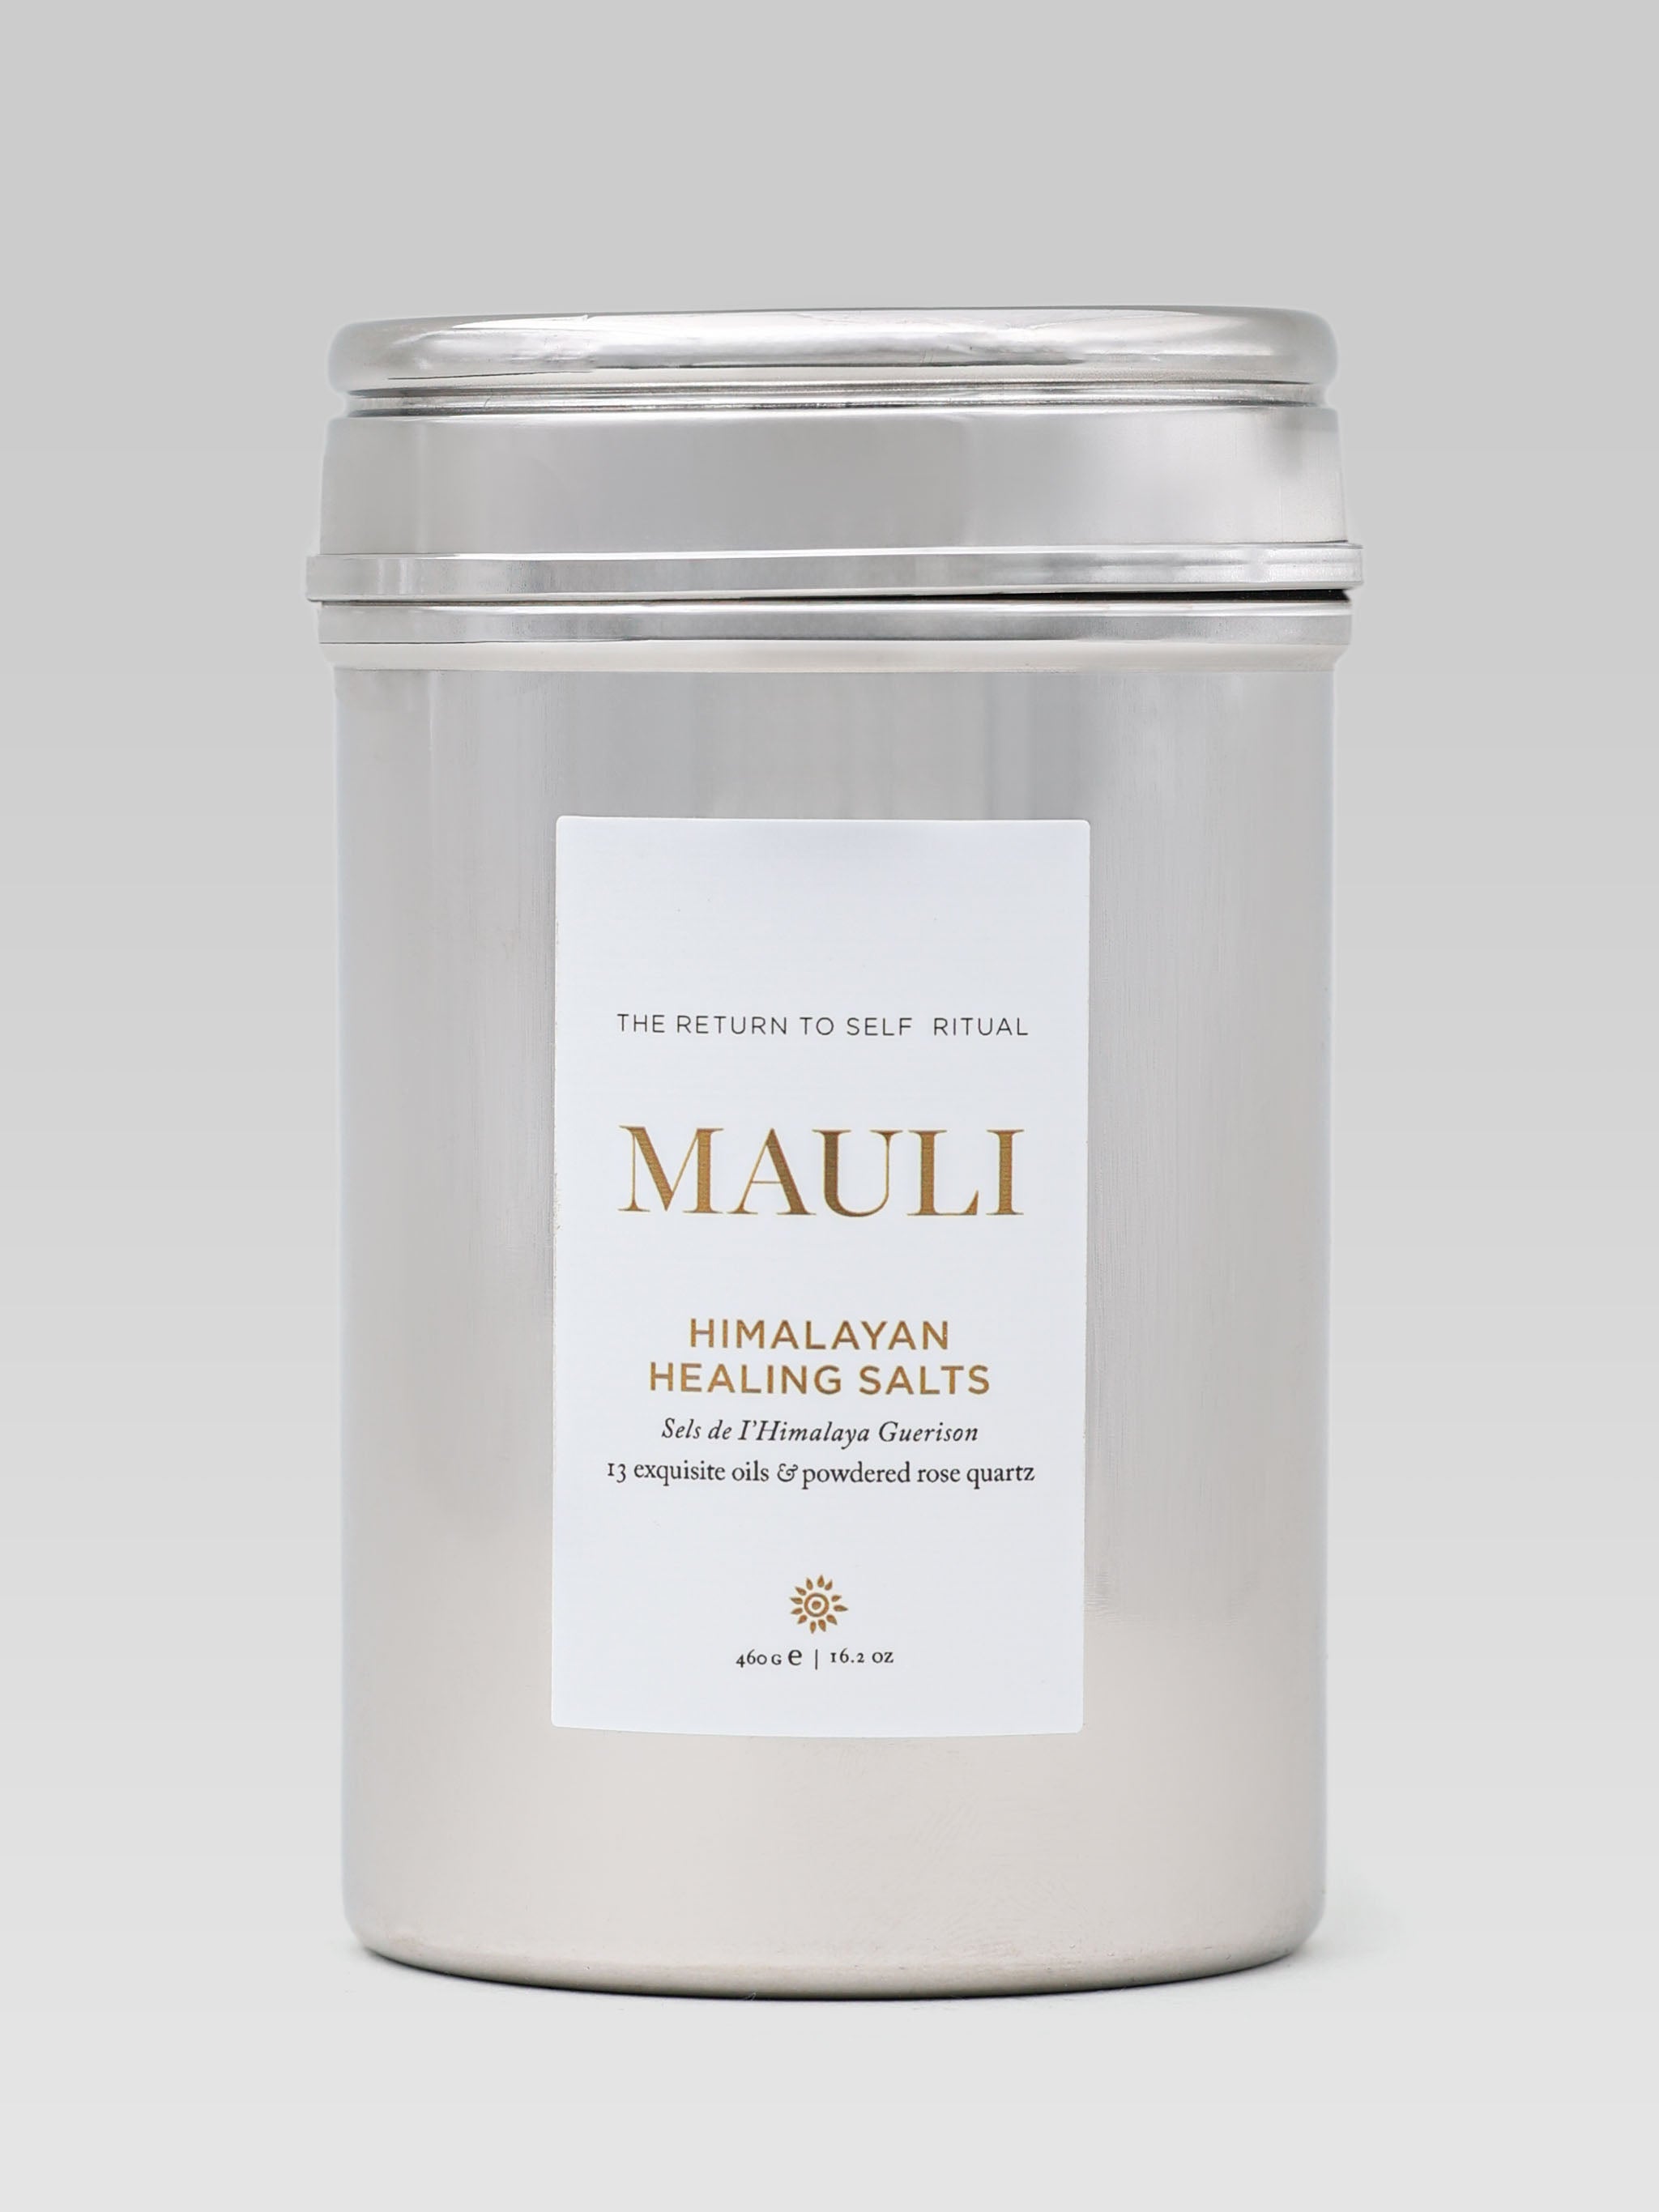 MAULI Himalayan Healing Salts product shot 